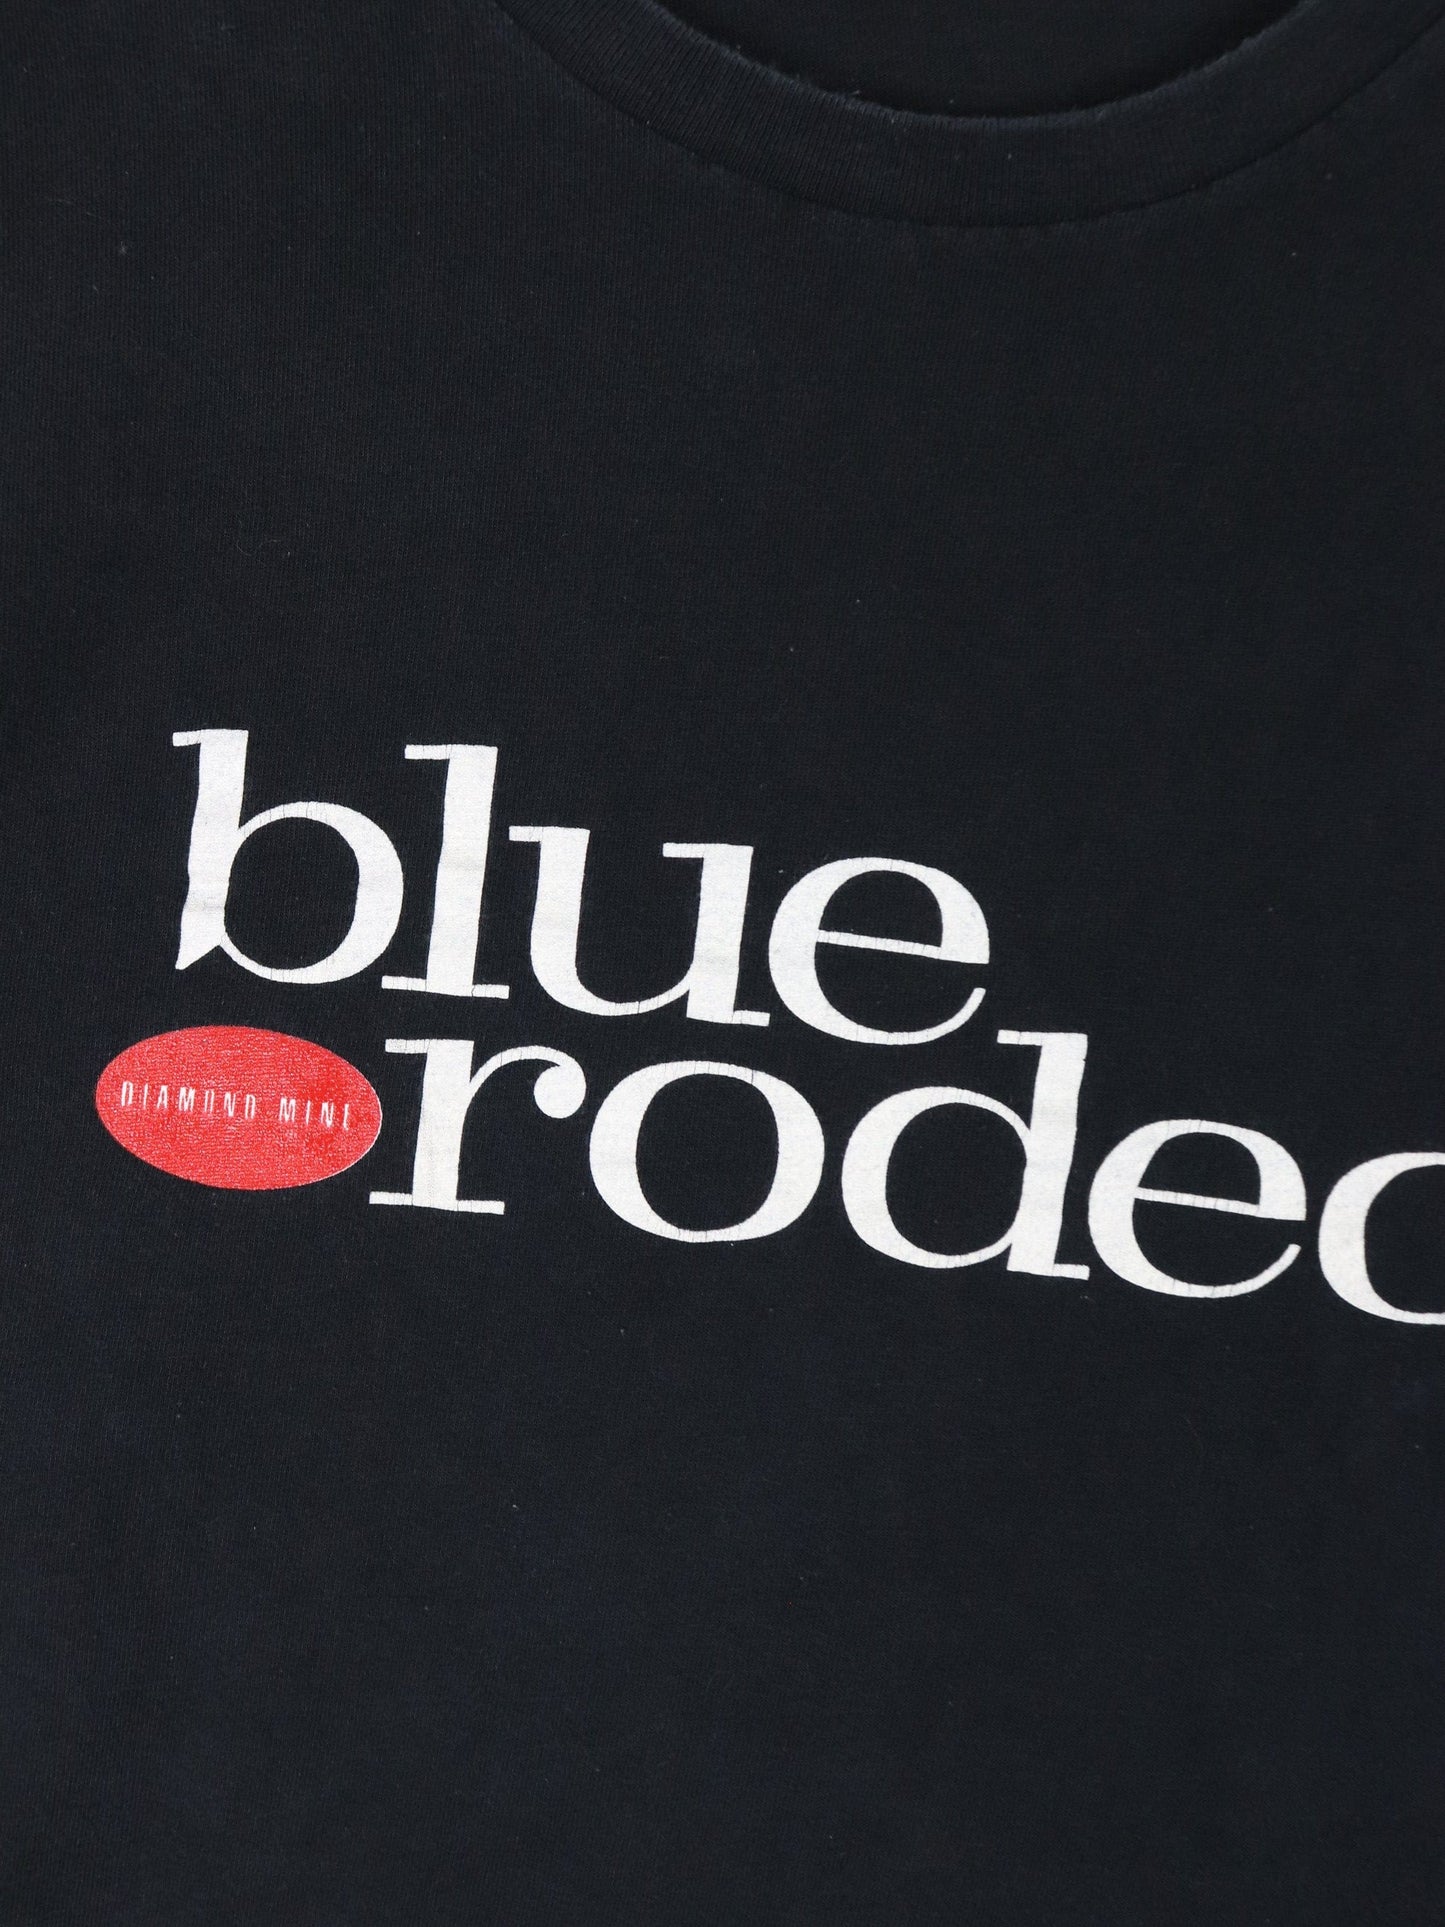 Other T-Shirts & Tank Tops Vintage Blue Rodeo T Shirt Mens XL Black Diamond Mine Band 90s